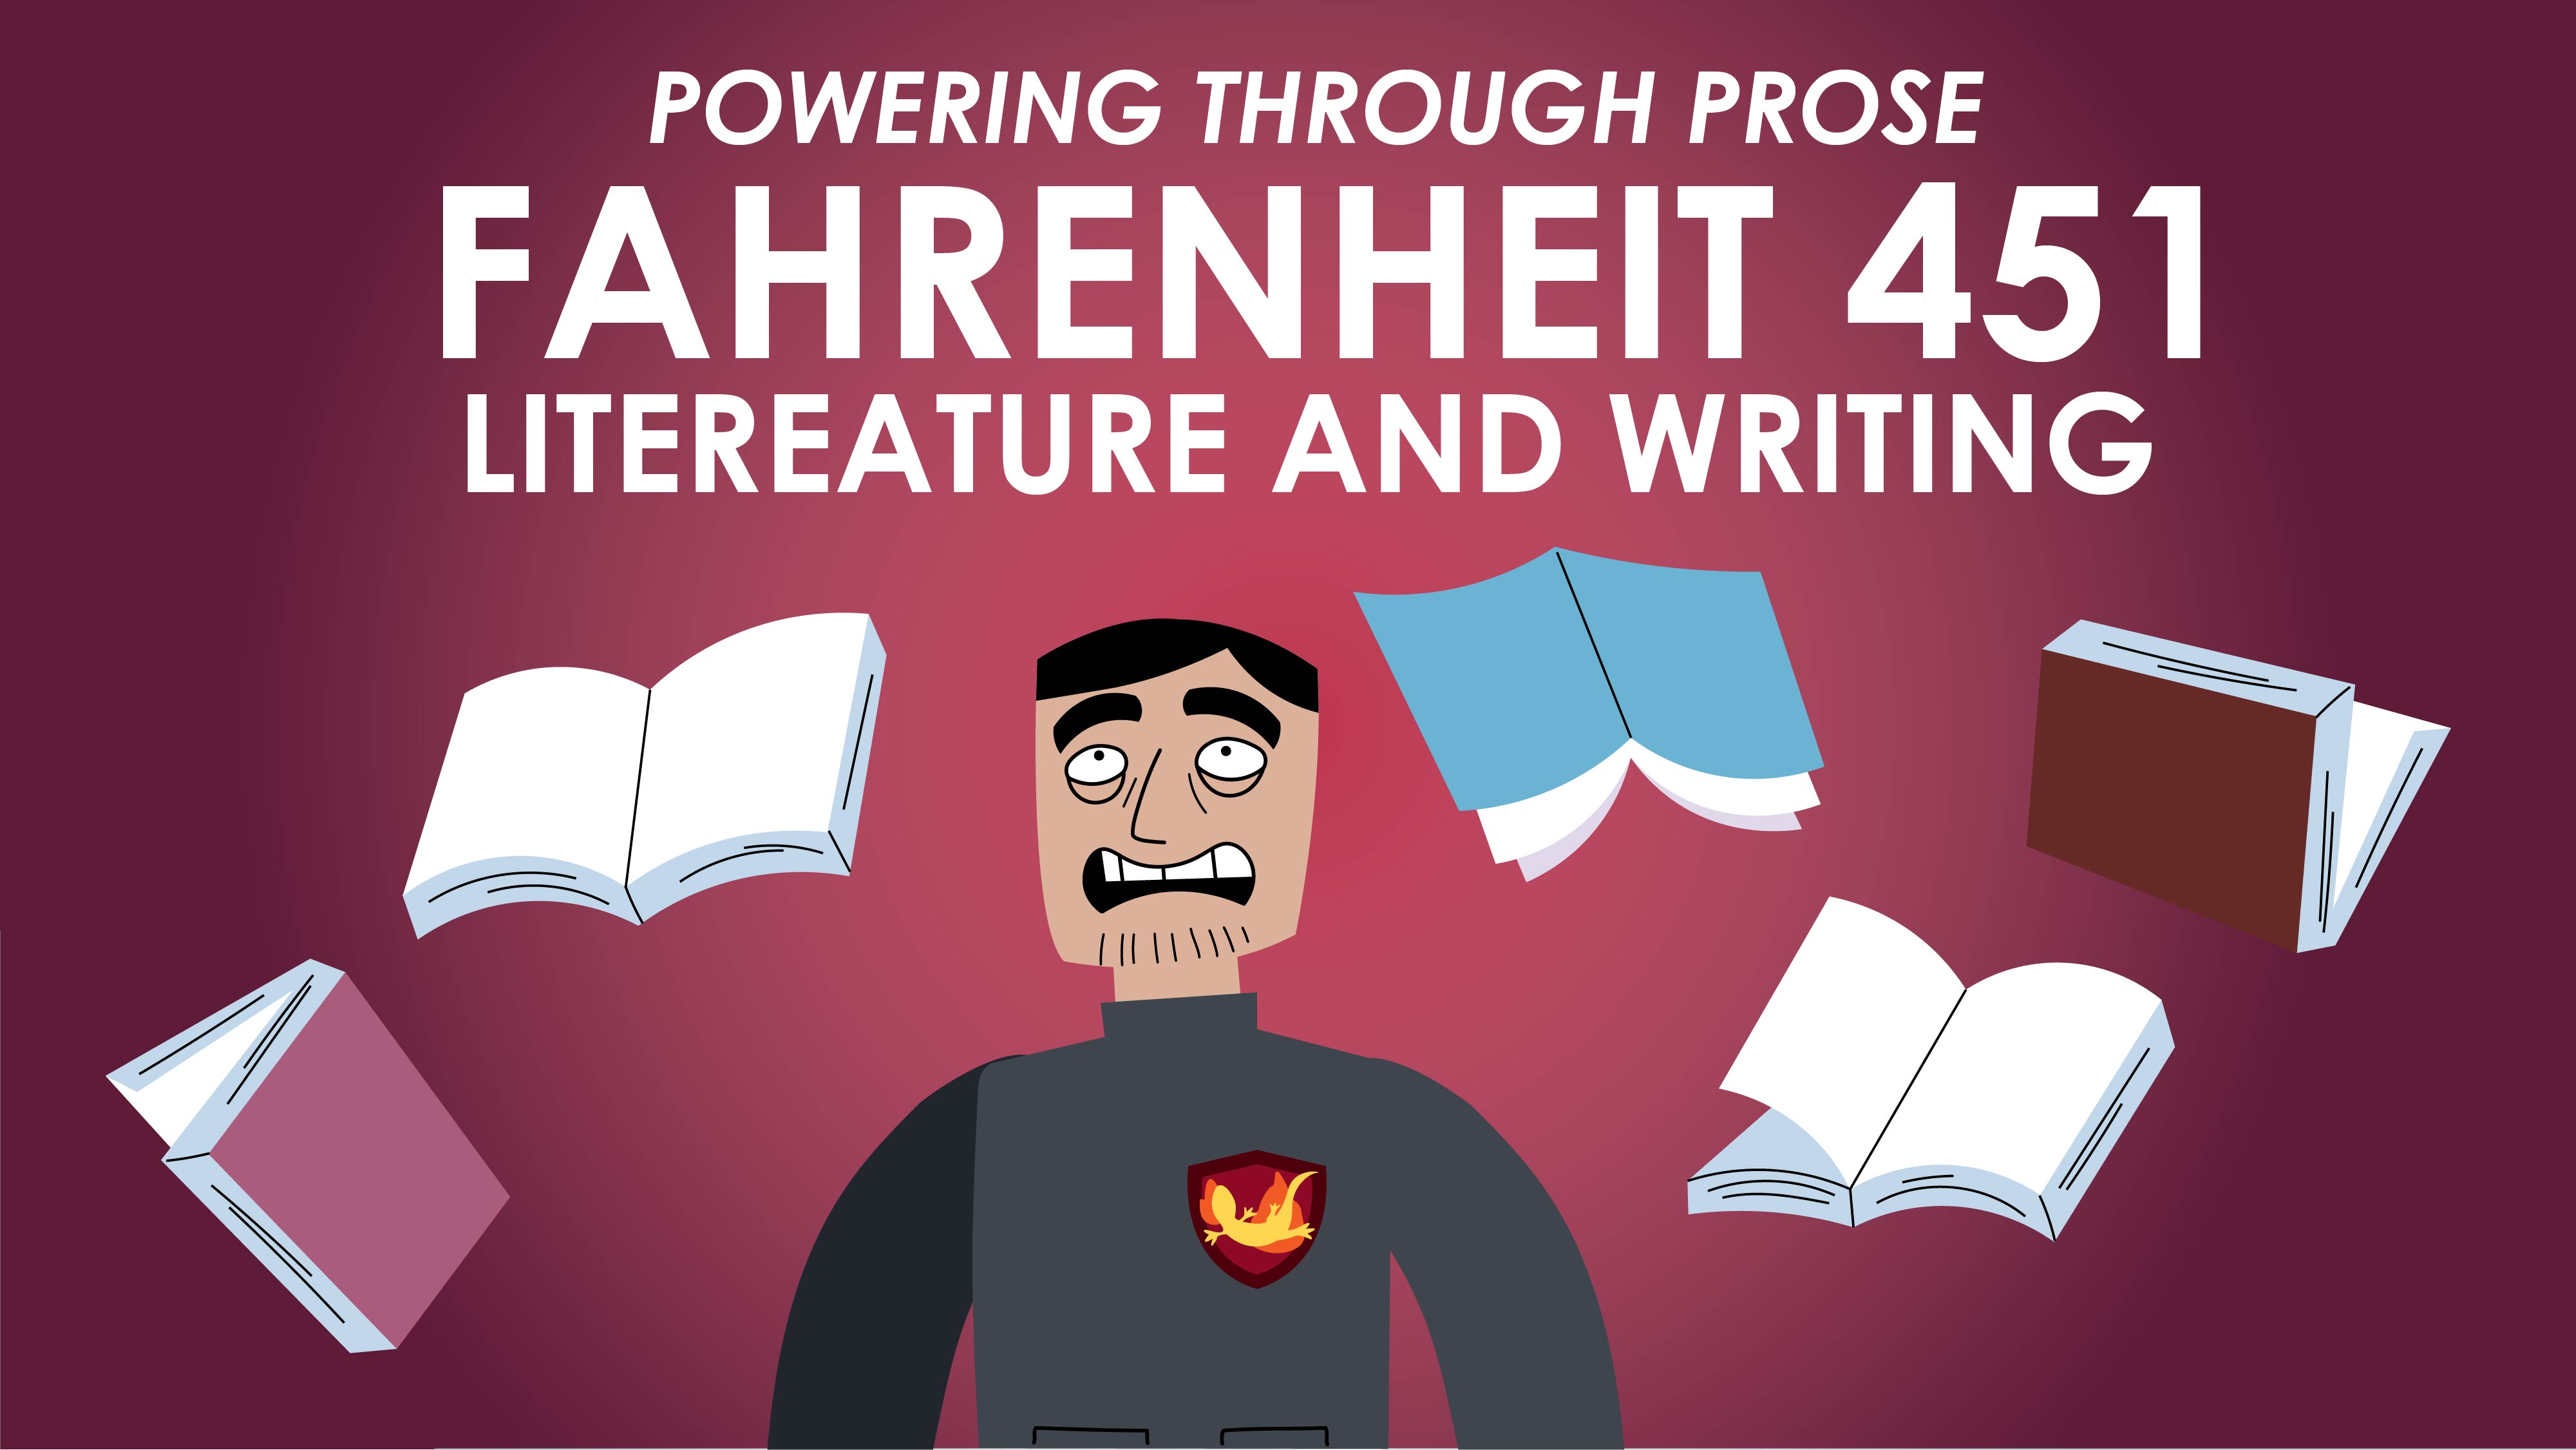 Fahrenheit 451 - Ray Bradbury - Literature and Writing - Powering Through Prose Series